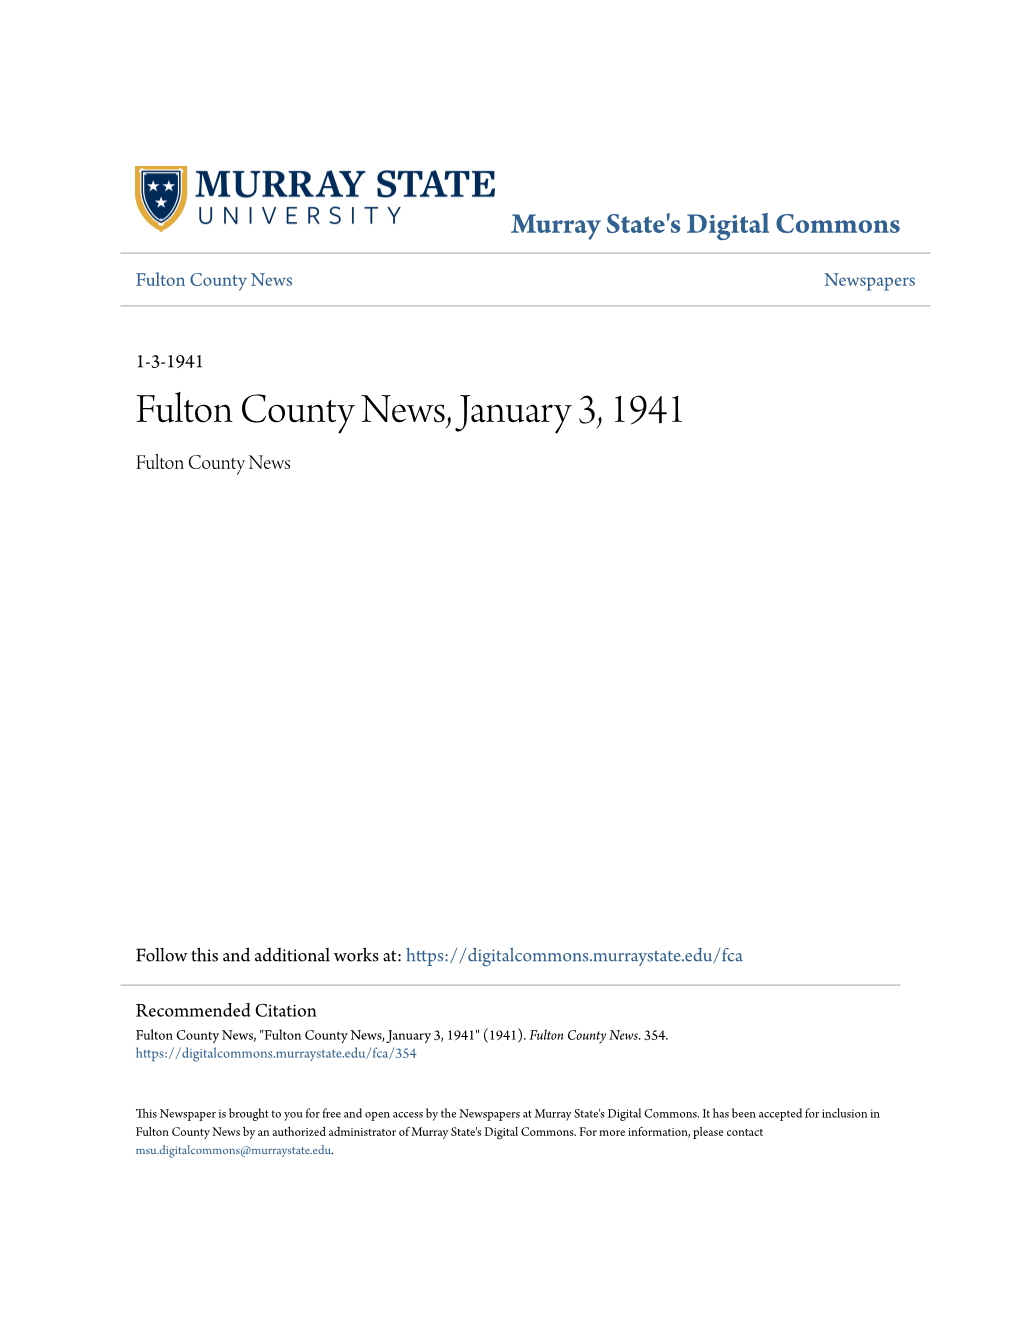 Fulton County News, January 3, 1941 Fulton County News